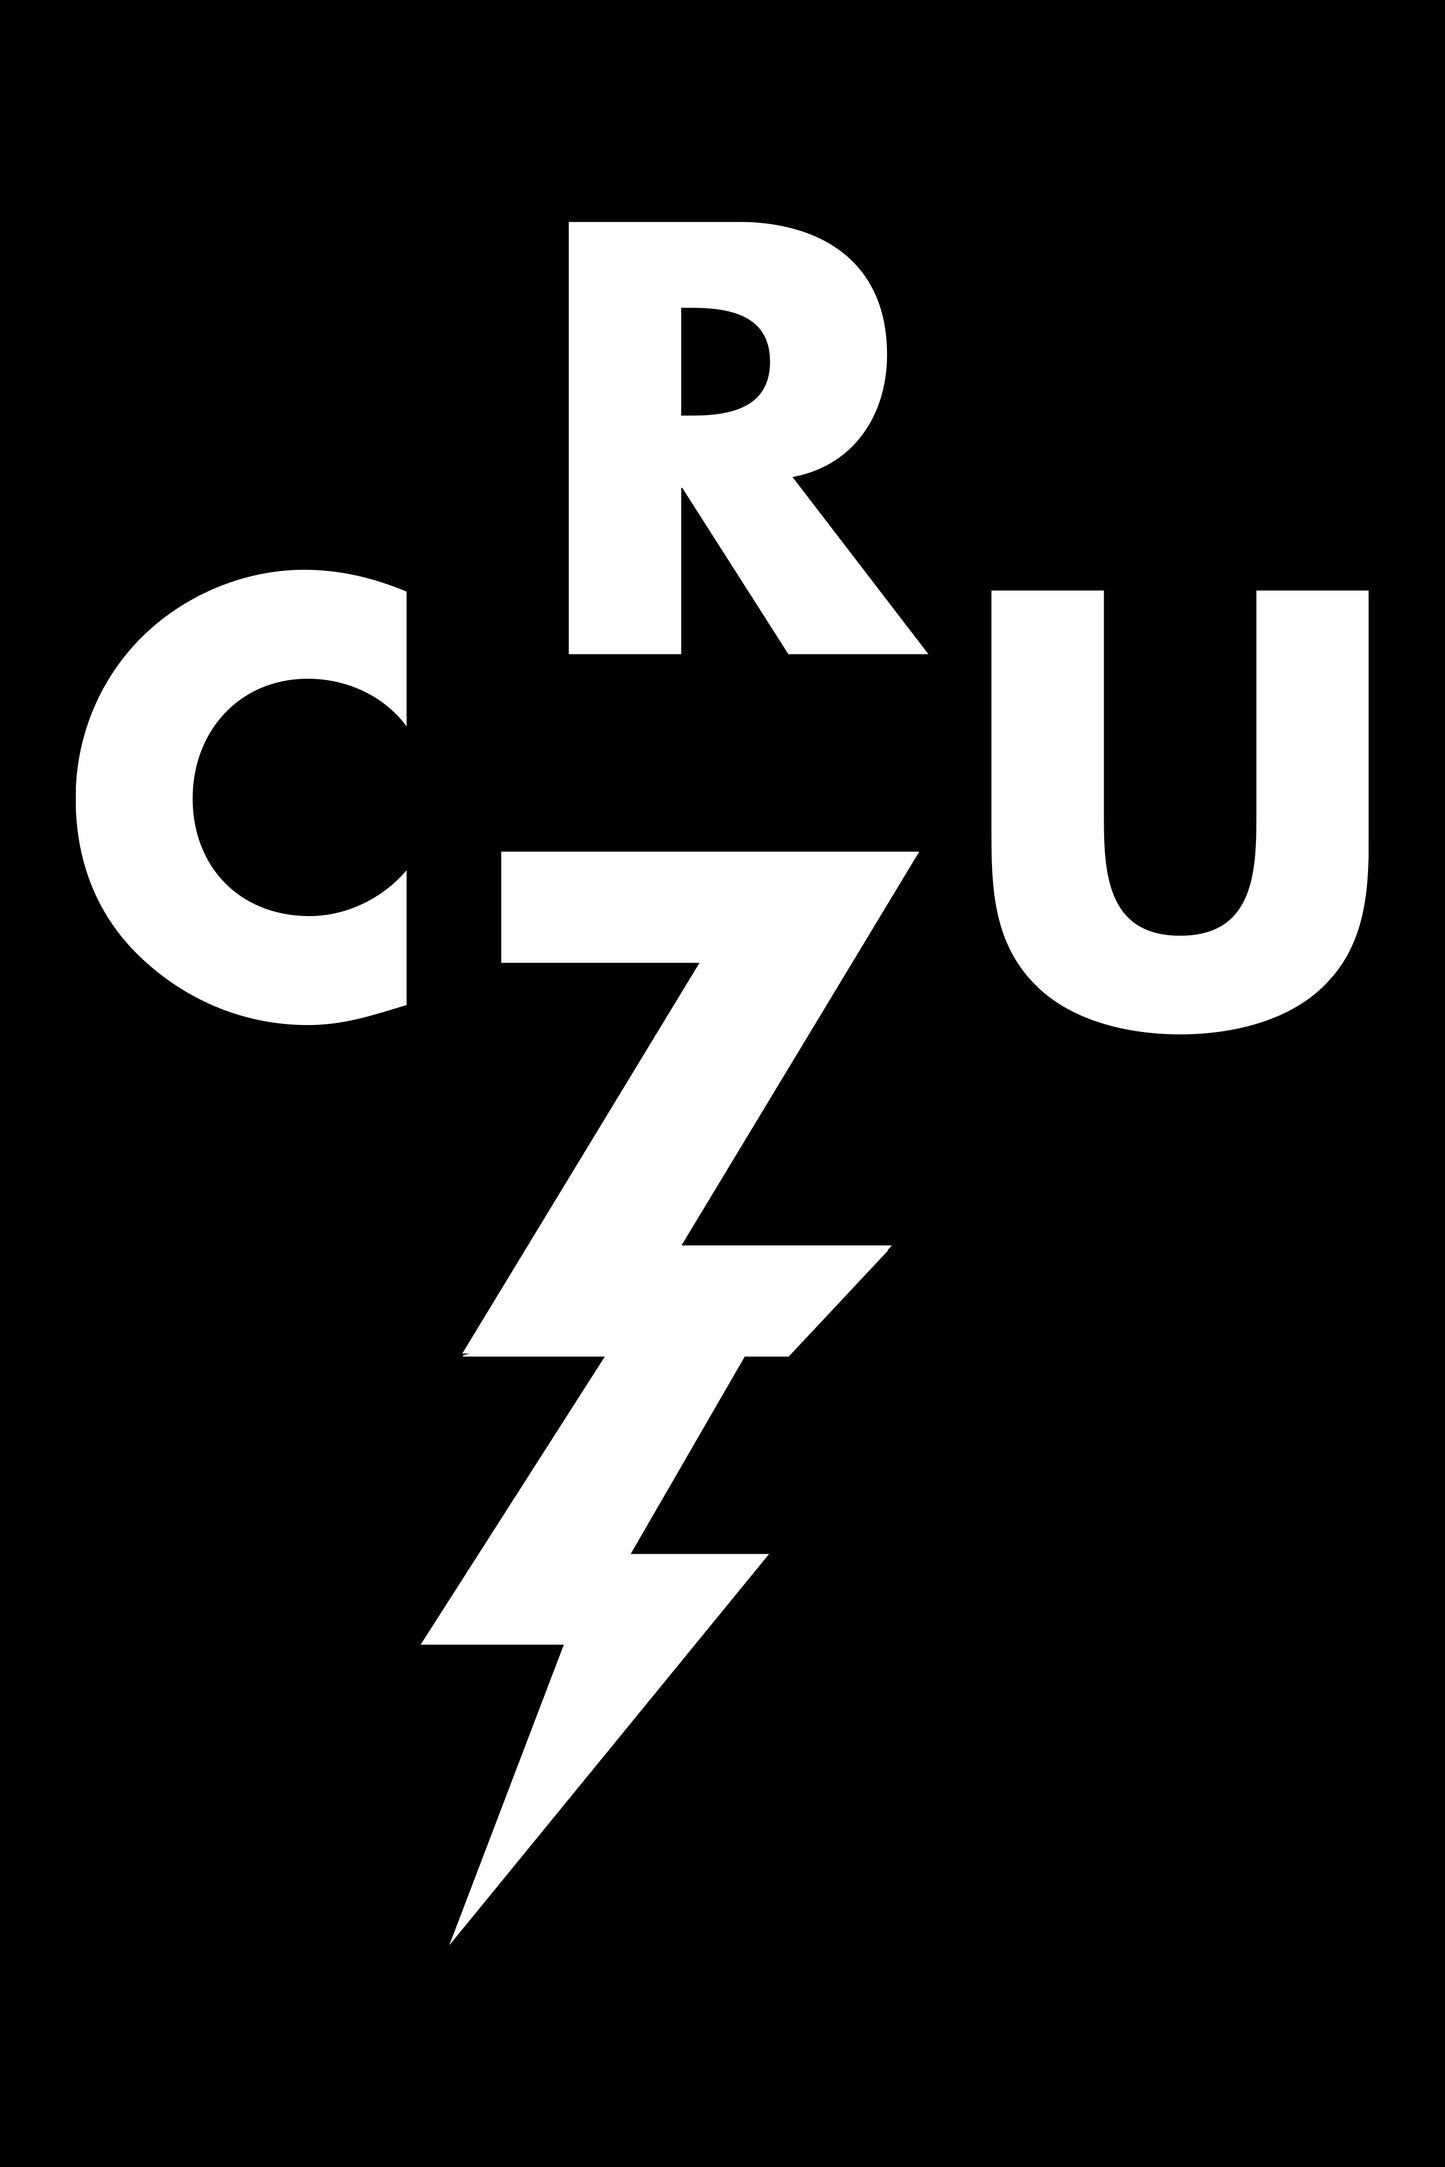 Dominick Cruz “CruzBolt” Adult T Shirt